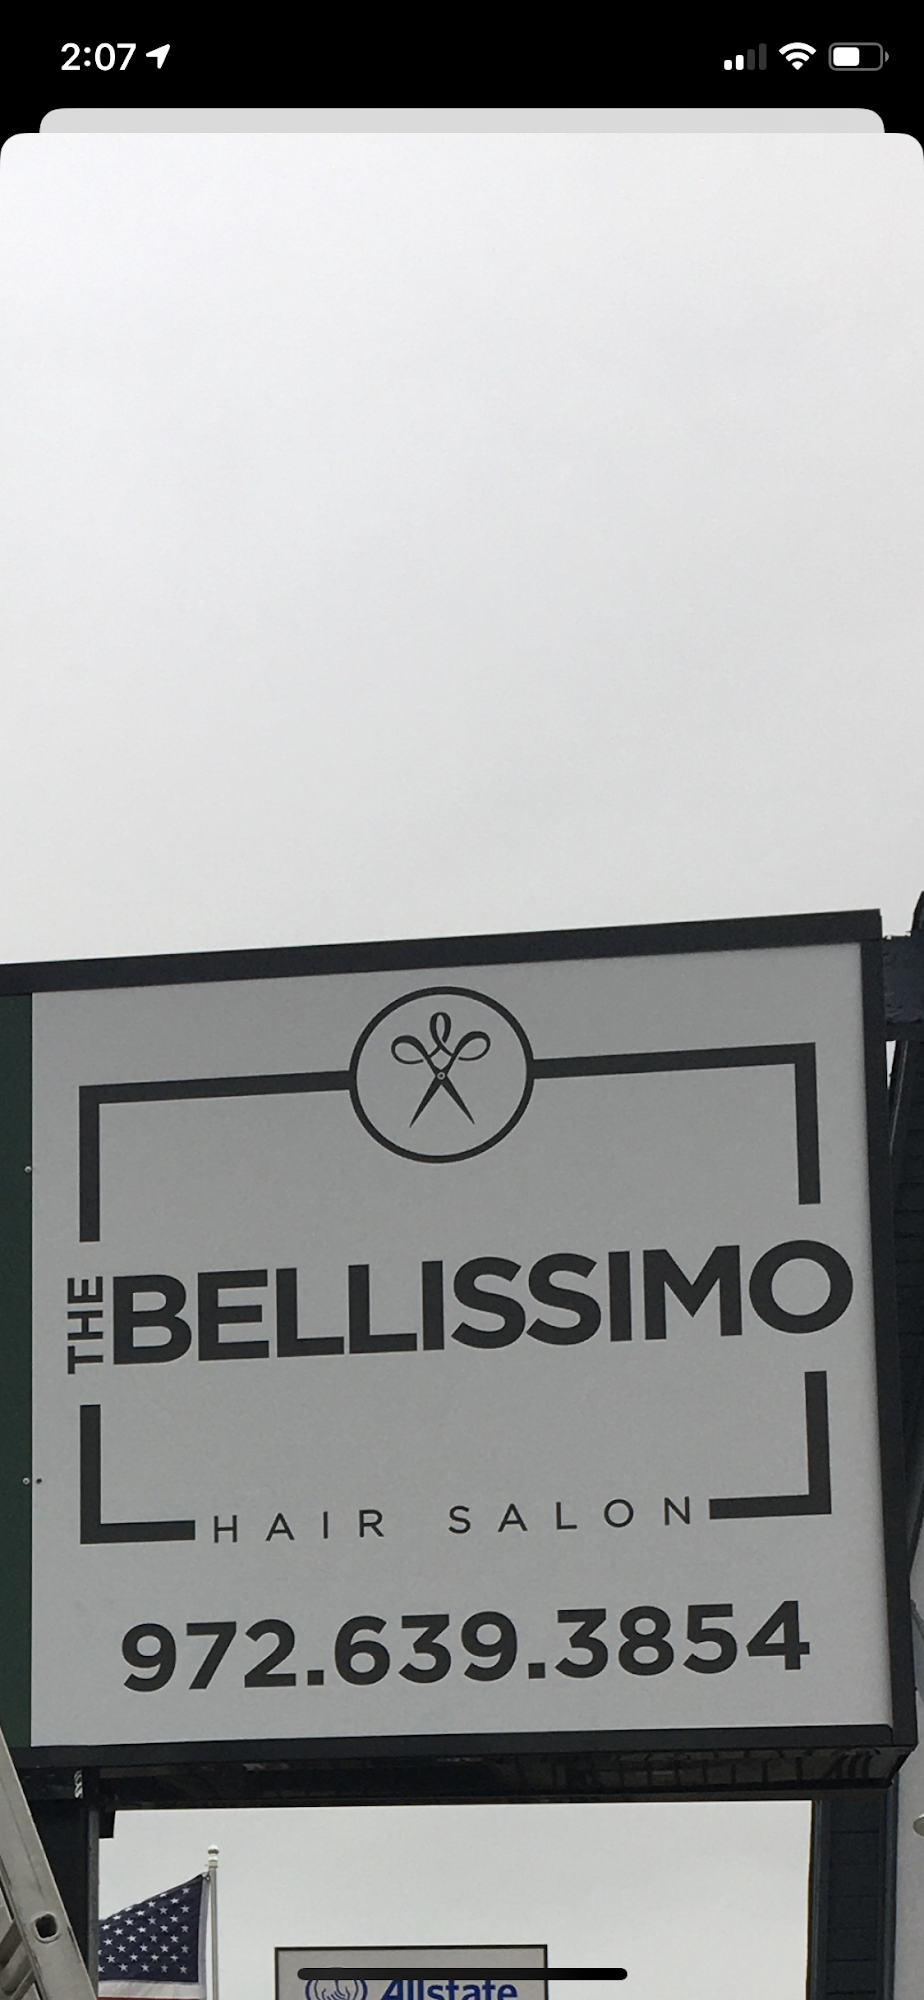 The Bellissimo Hair Salon